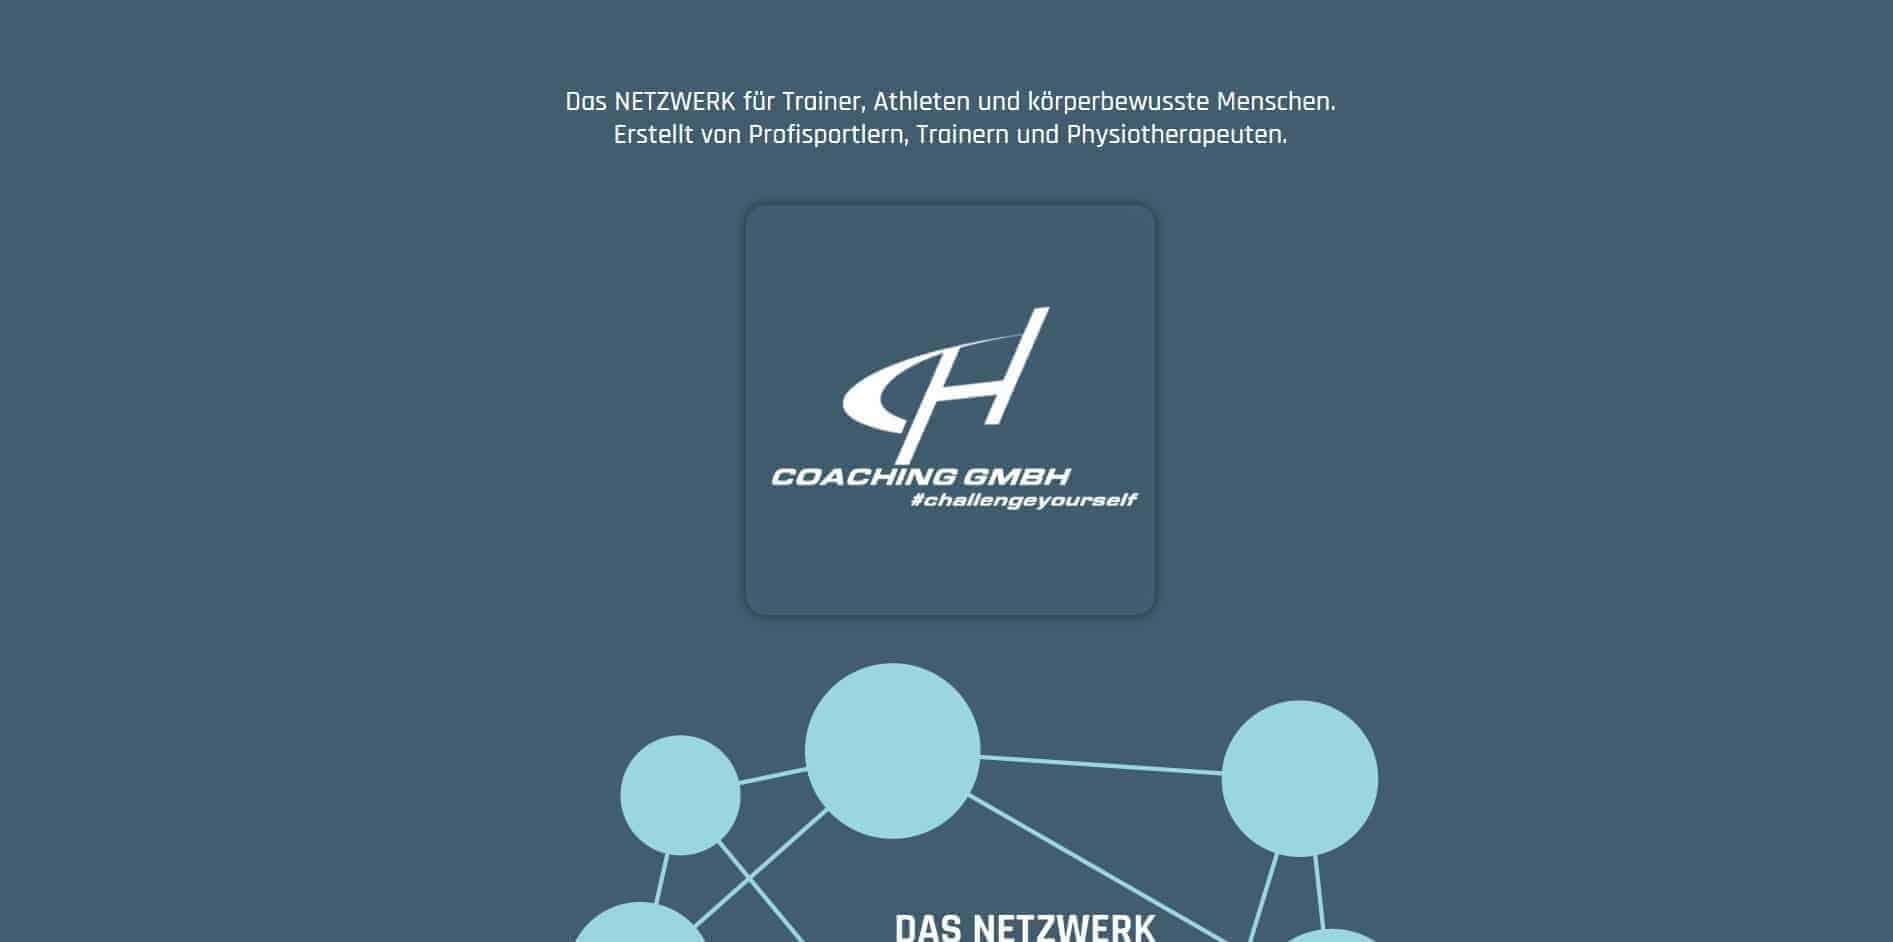 Christopher Hörl, Geschäftsführer Coaching GmbH